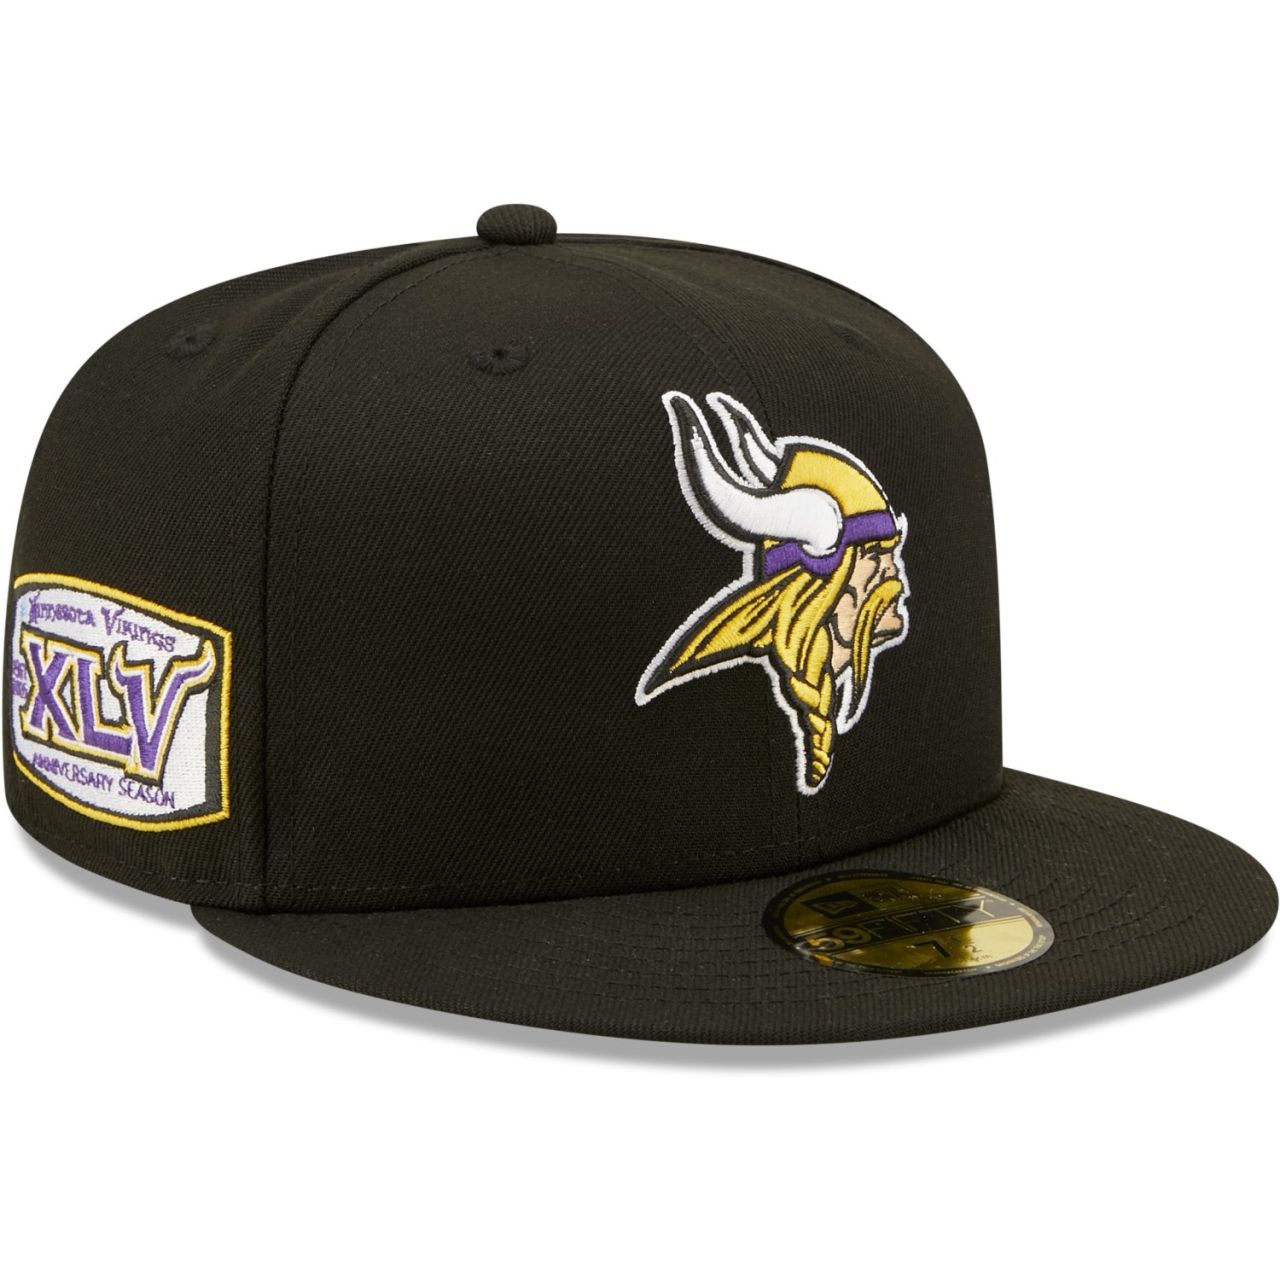 New Era 59Fifty Fitted Cap - Minnesota Vikings 45 Seasons von New Era